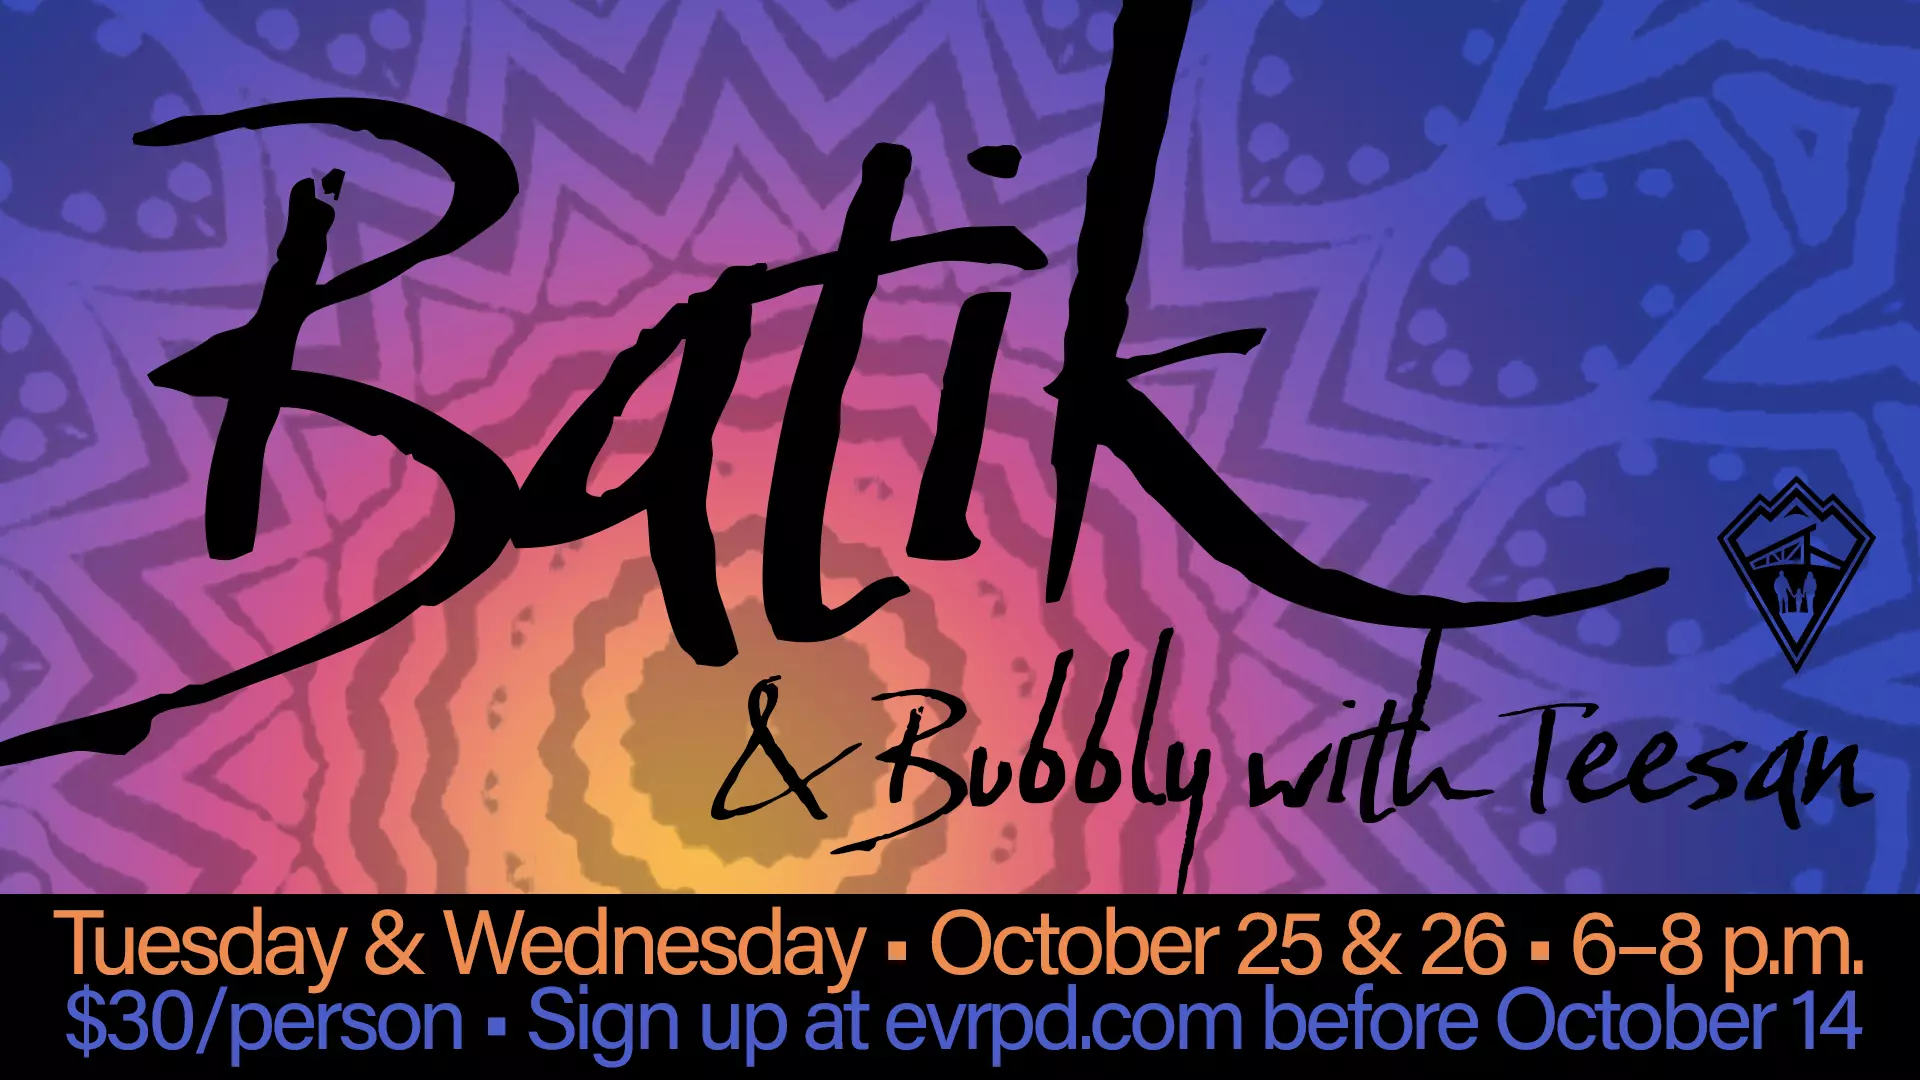 Batik art project and sparkling wine